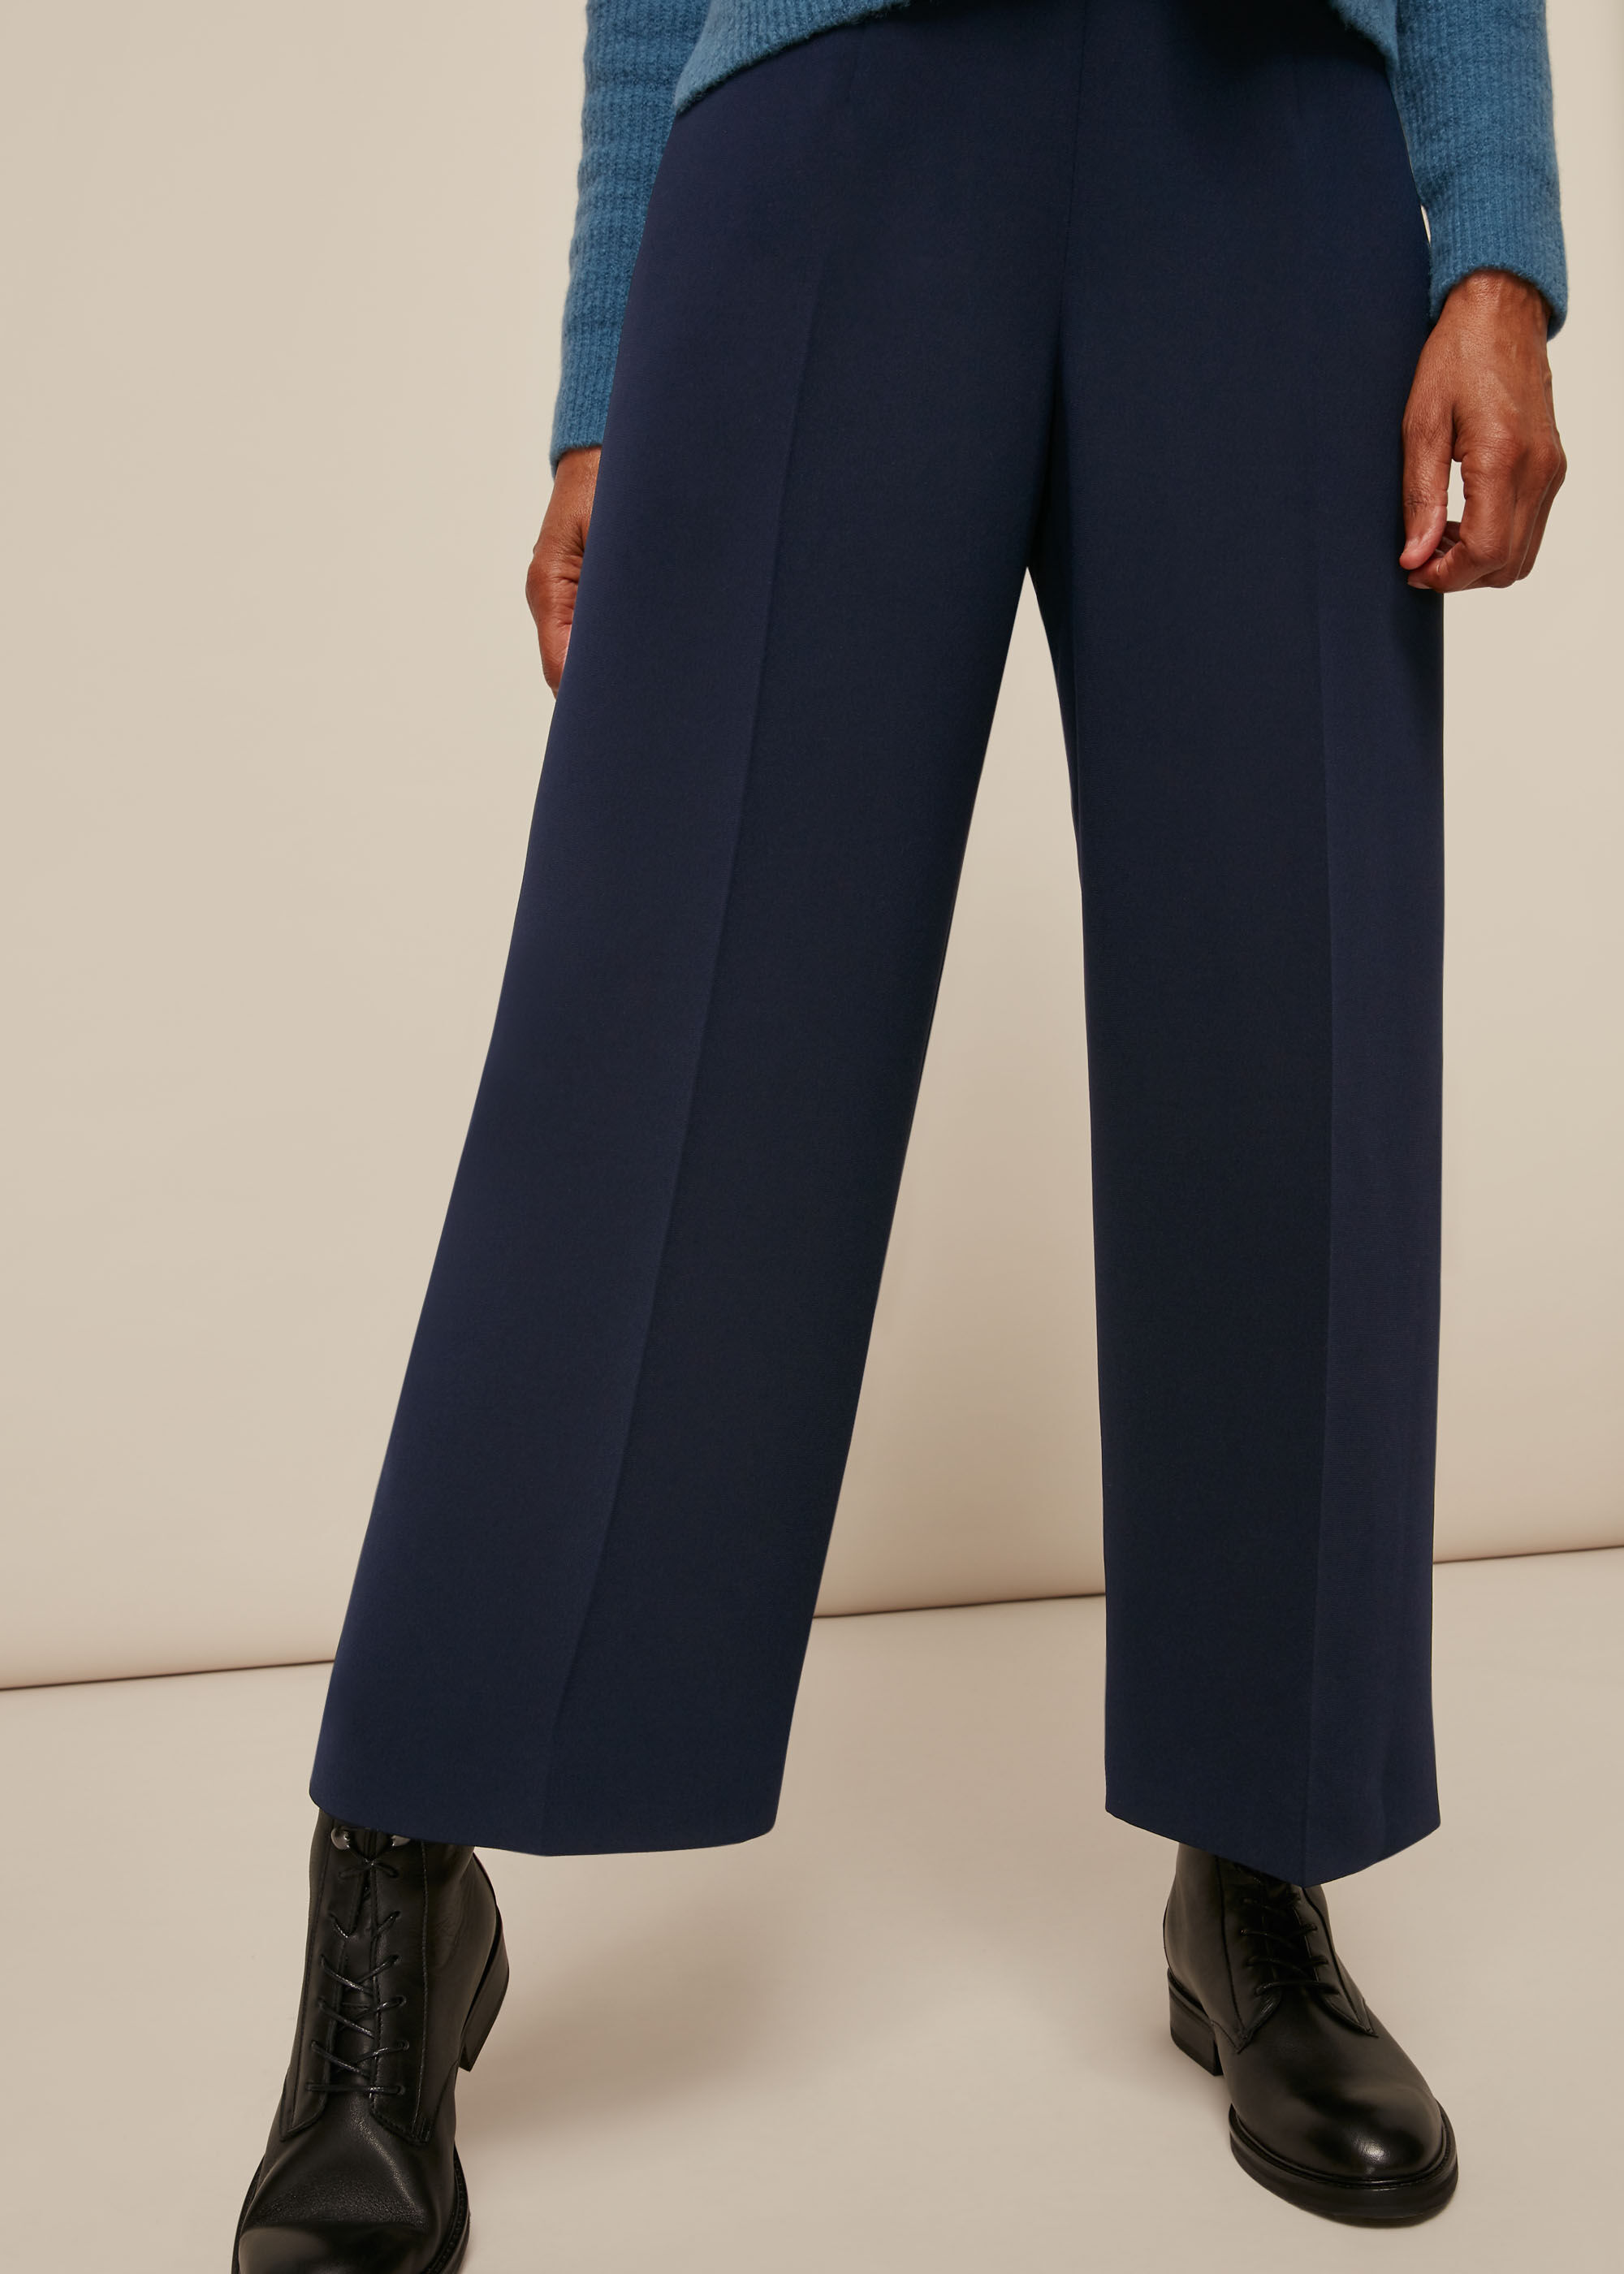 Buy Womens High Waist Casual Wide Leg Palazzo Pants Loose Work Long Trousers  Navy Medium at Amazonin